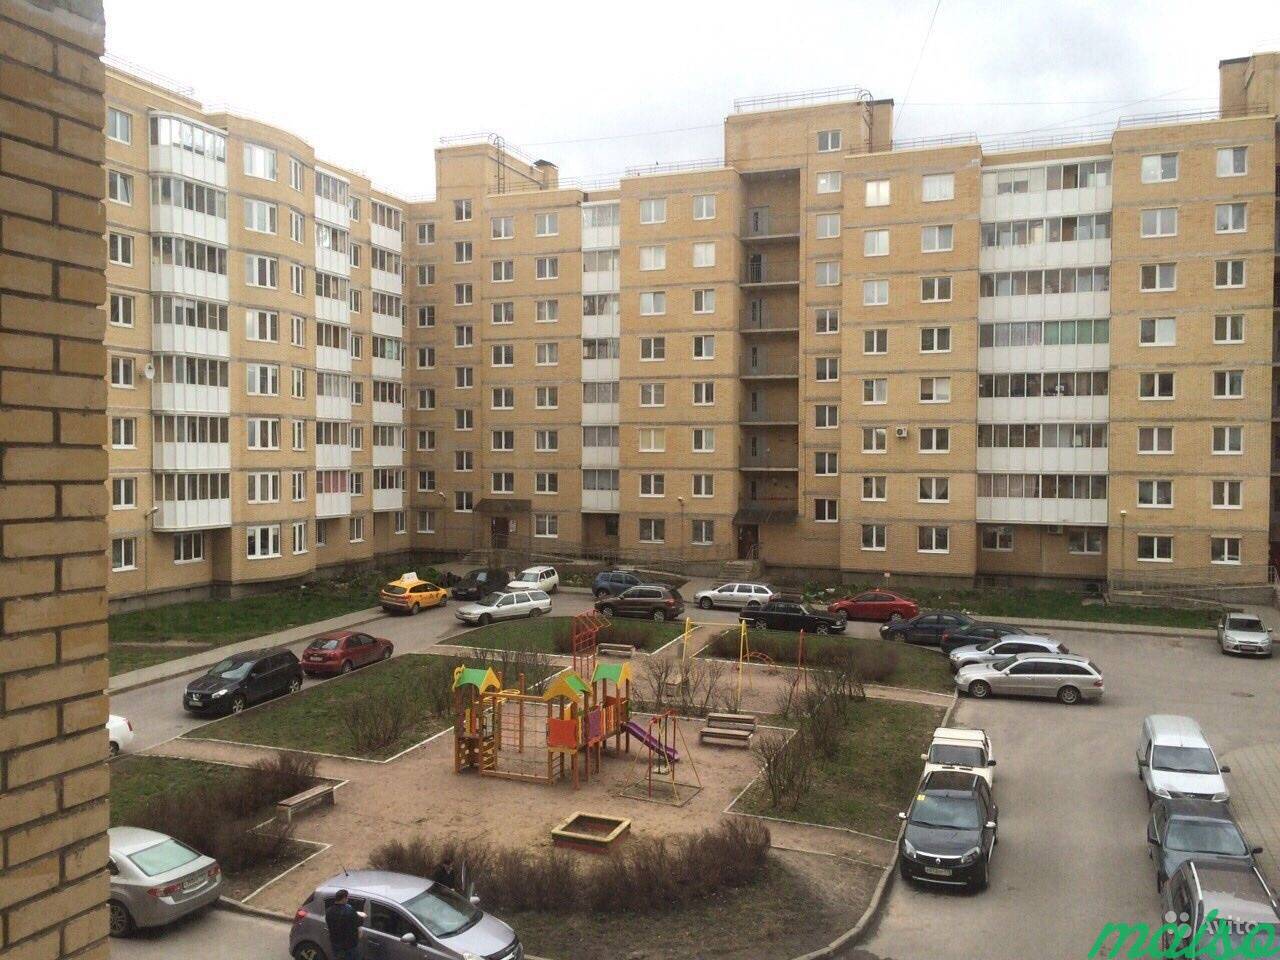 Комната 14 м² в 3-к, 3/7 эт. в Санкт-Петербурге. Фото 1